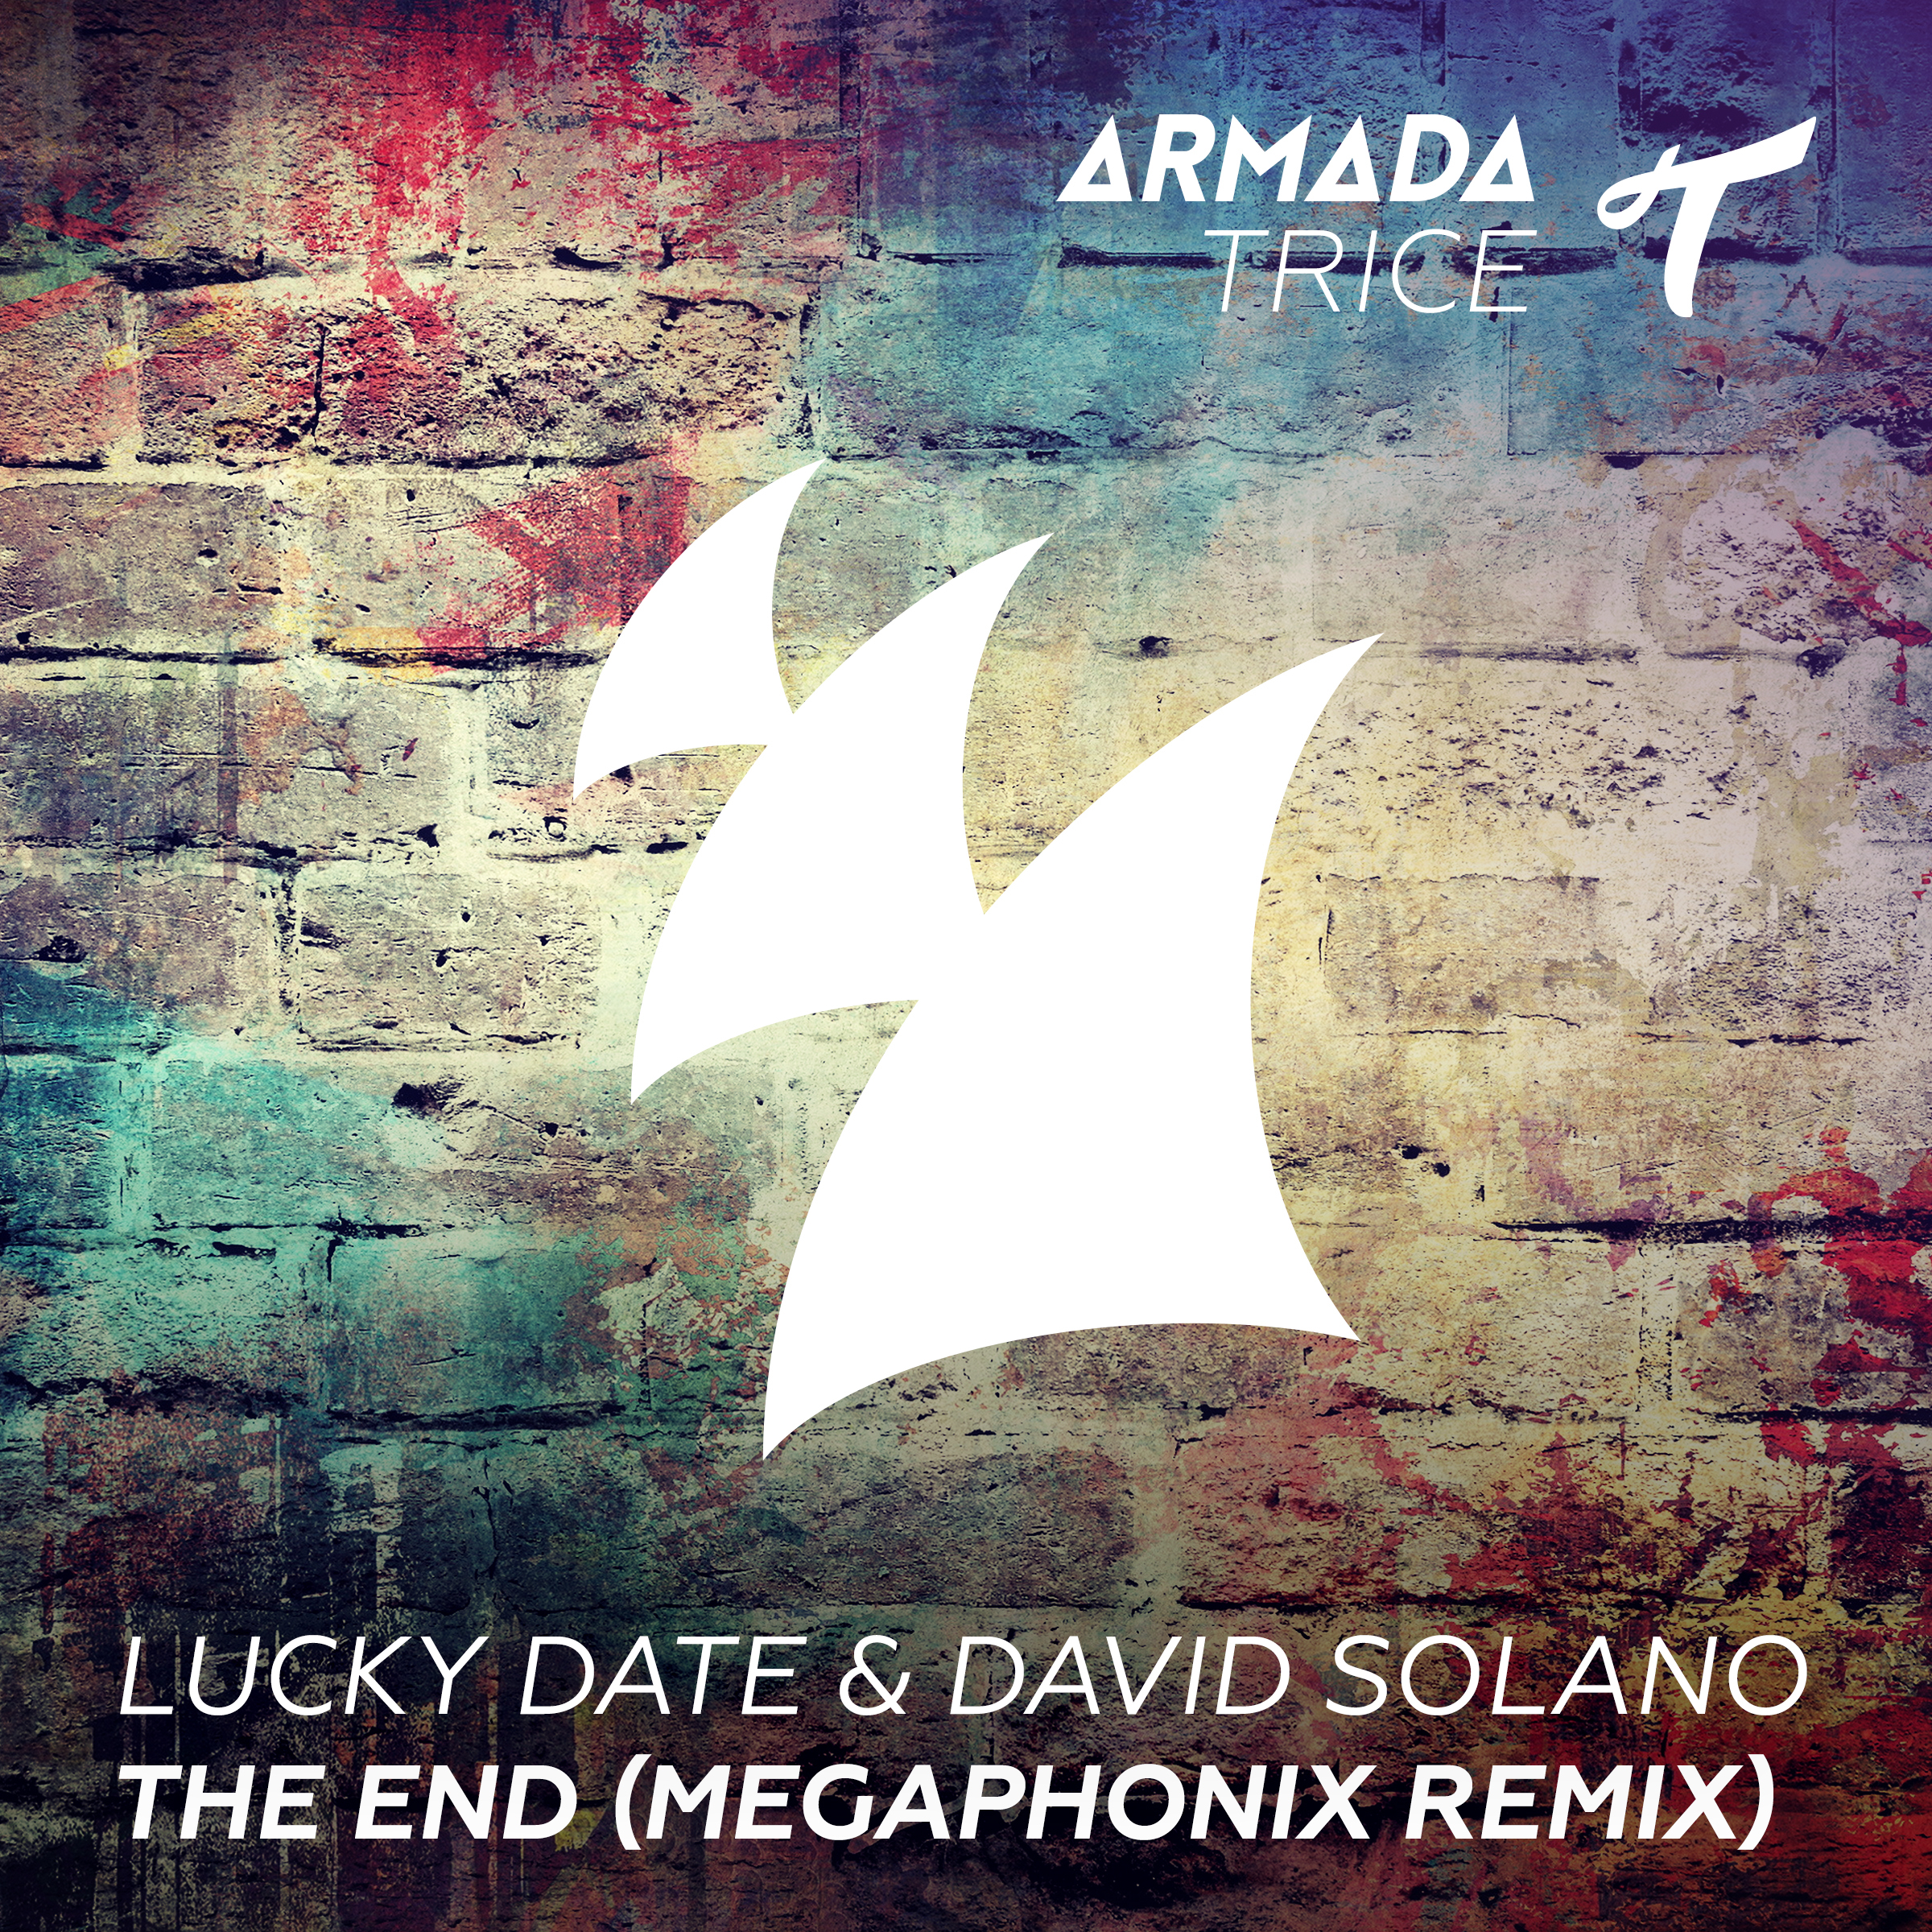 The End (Megaphonix Remix)